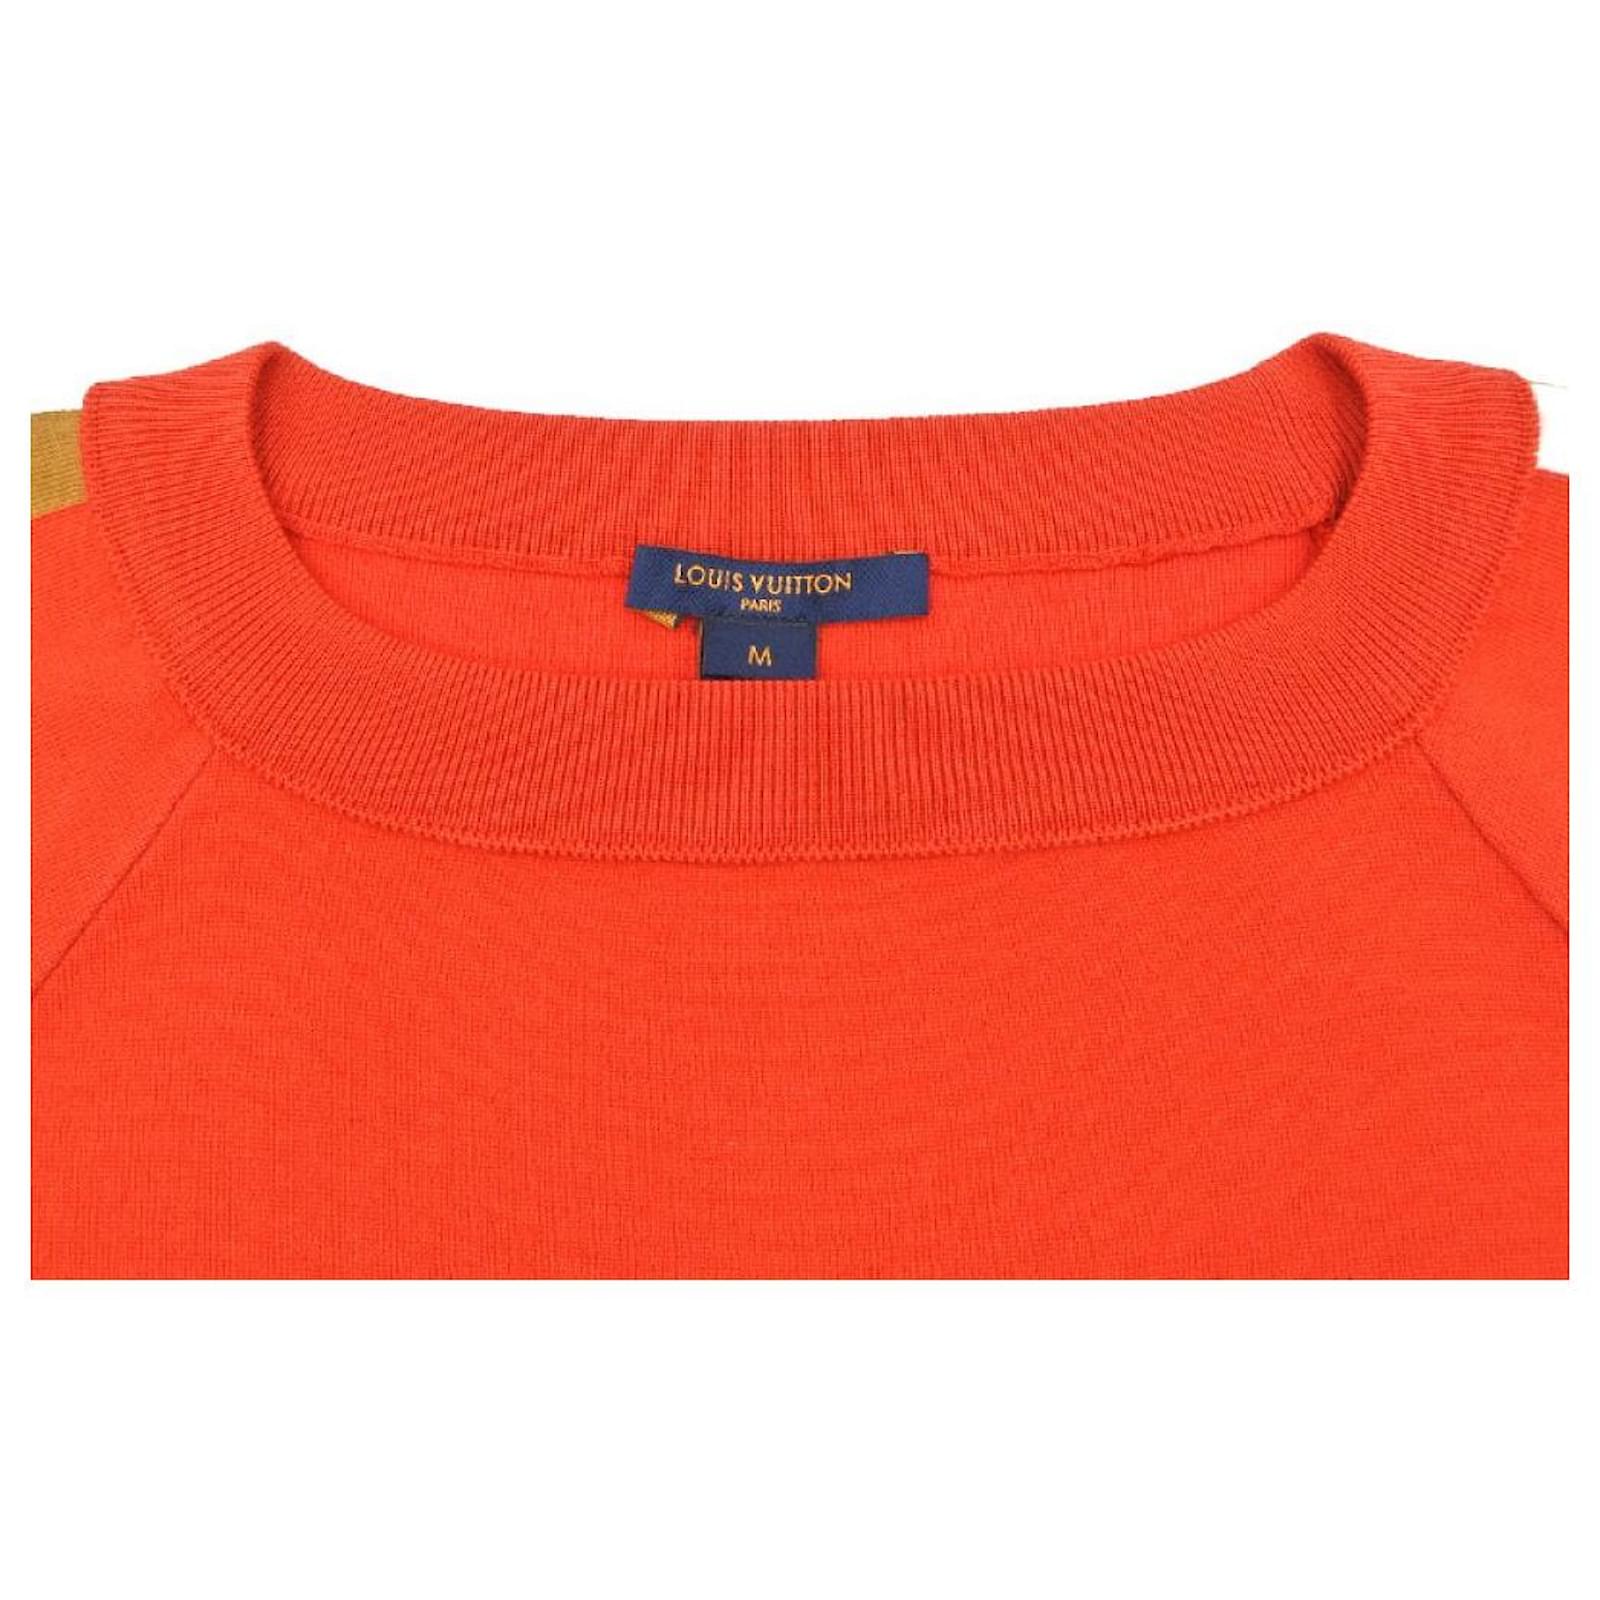 vuitton pullover orange